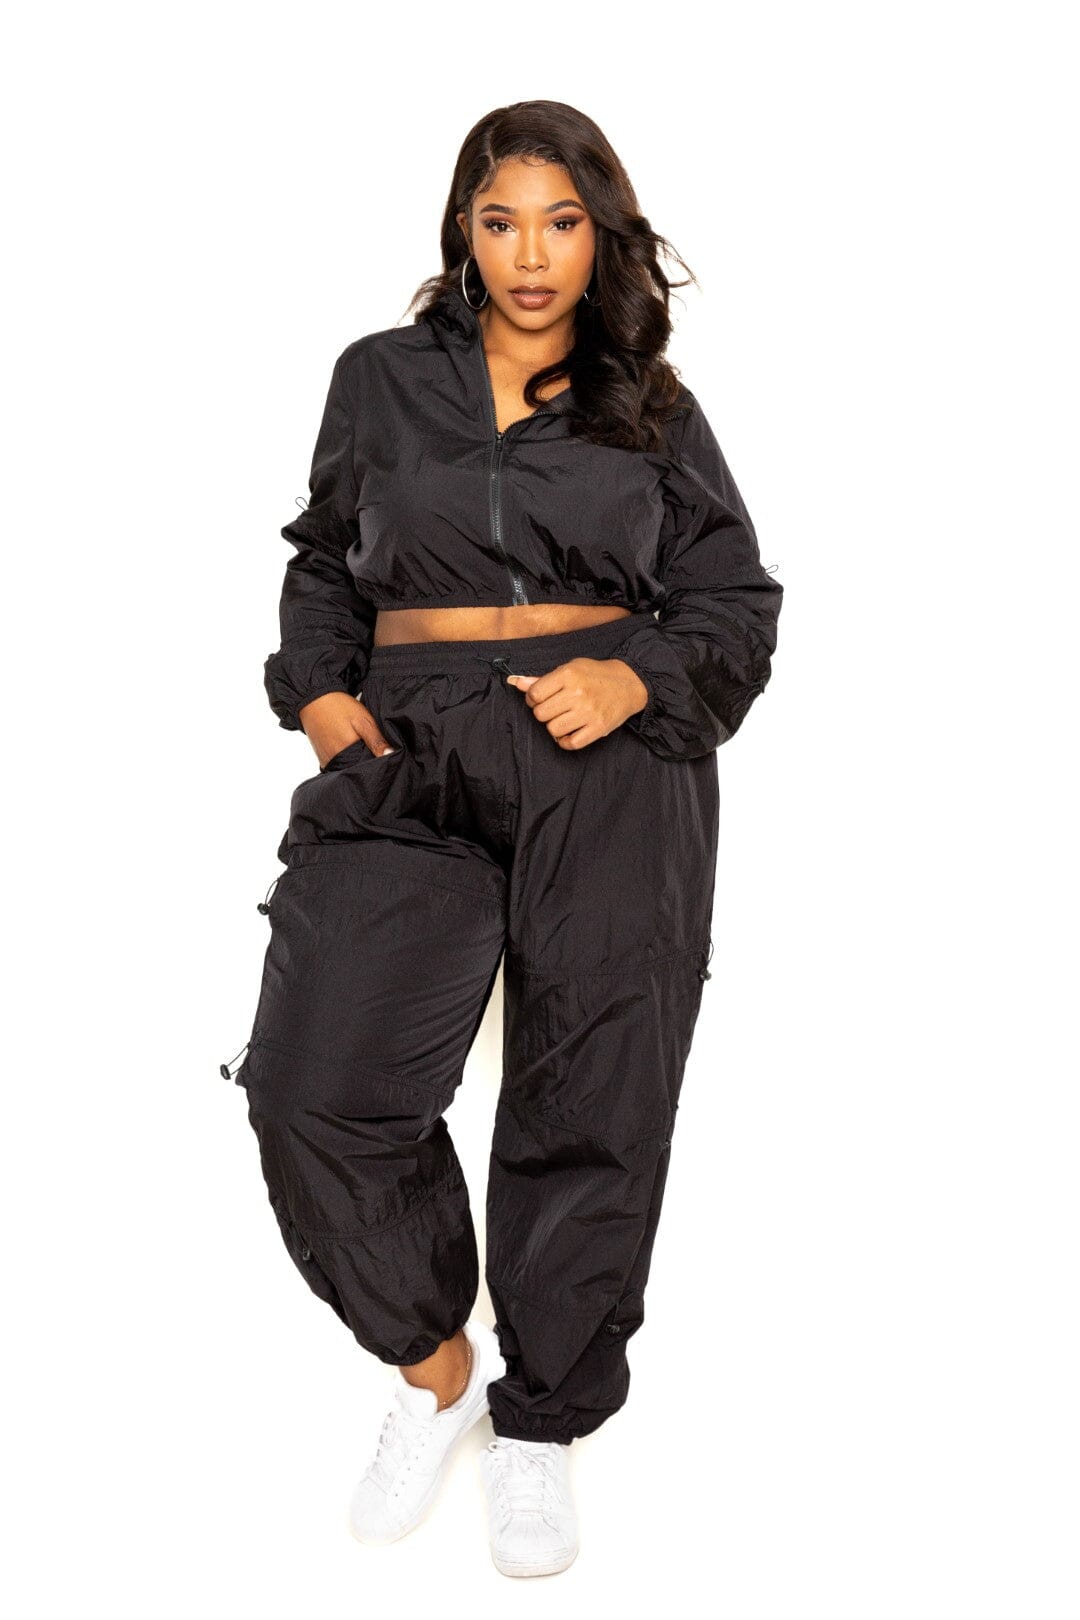 Plus Size 2 piece Black Cord Lock Detail Long Sleeve Zip Up Crop Top and pant activewear Set jehouze 